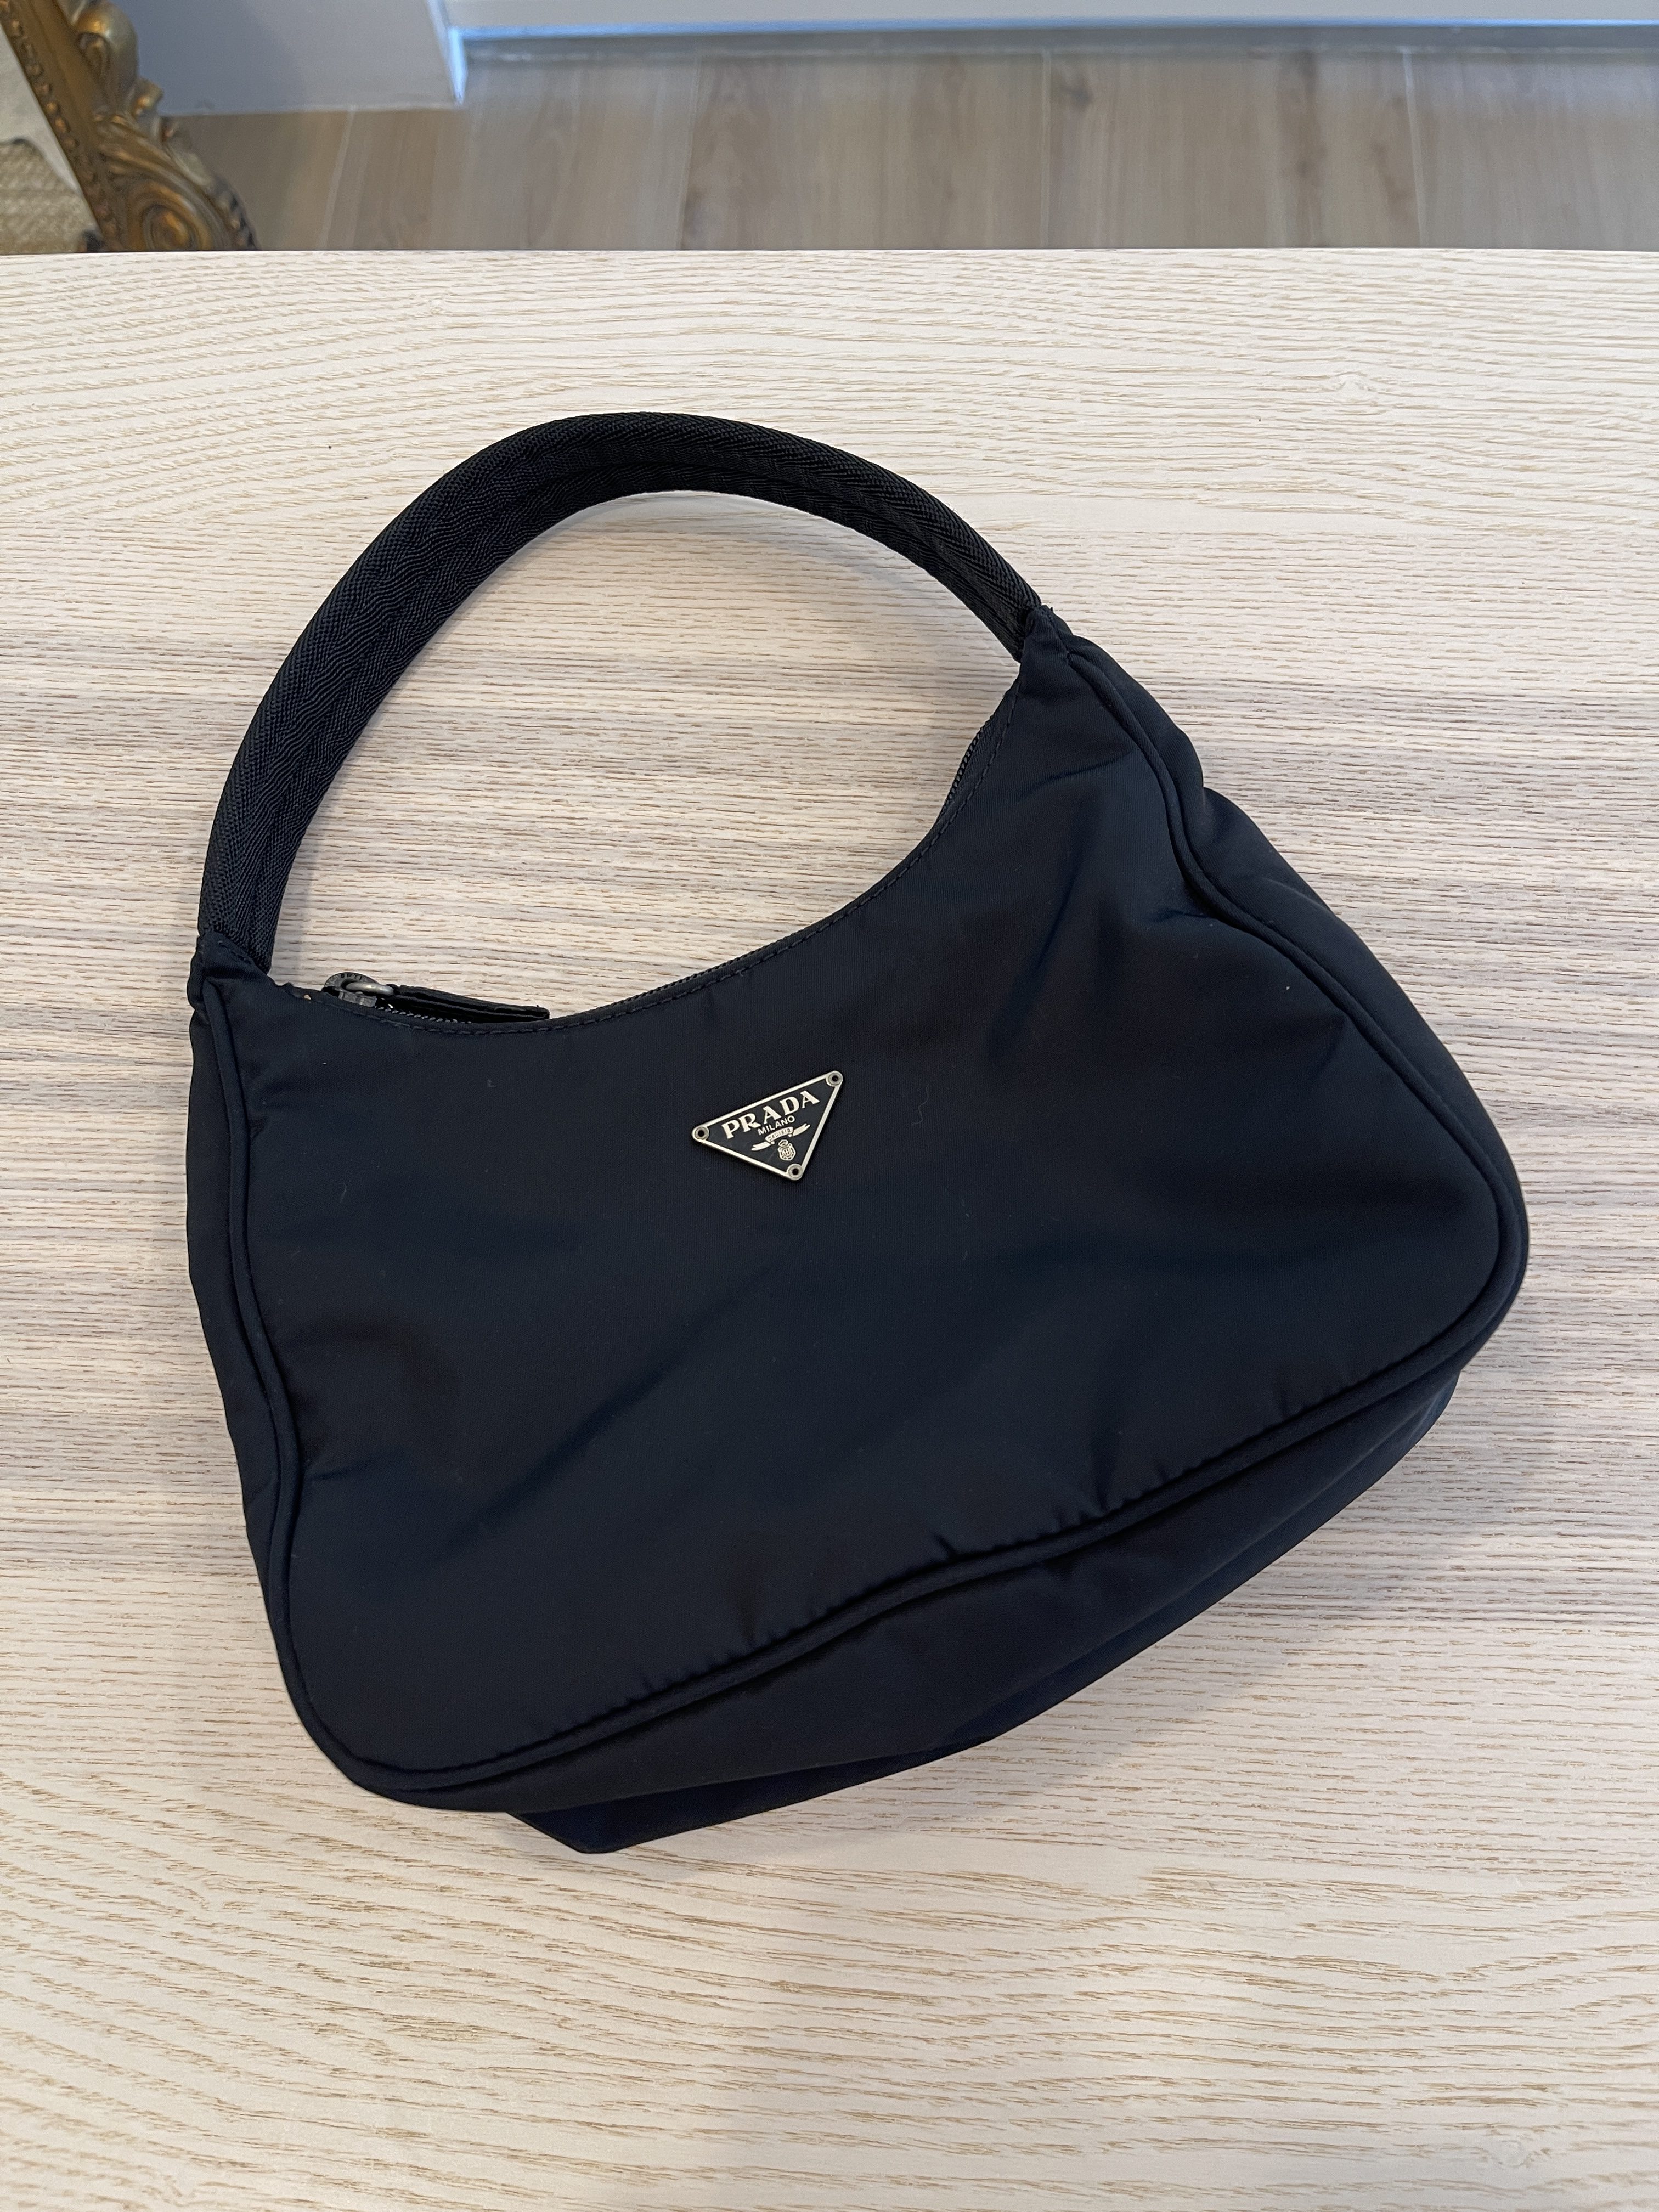 Prada Handbag Black Nylon Sport Purse Vintage Shoulder Bag Tessuto Authentic